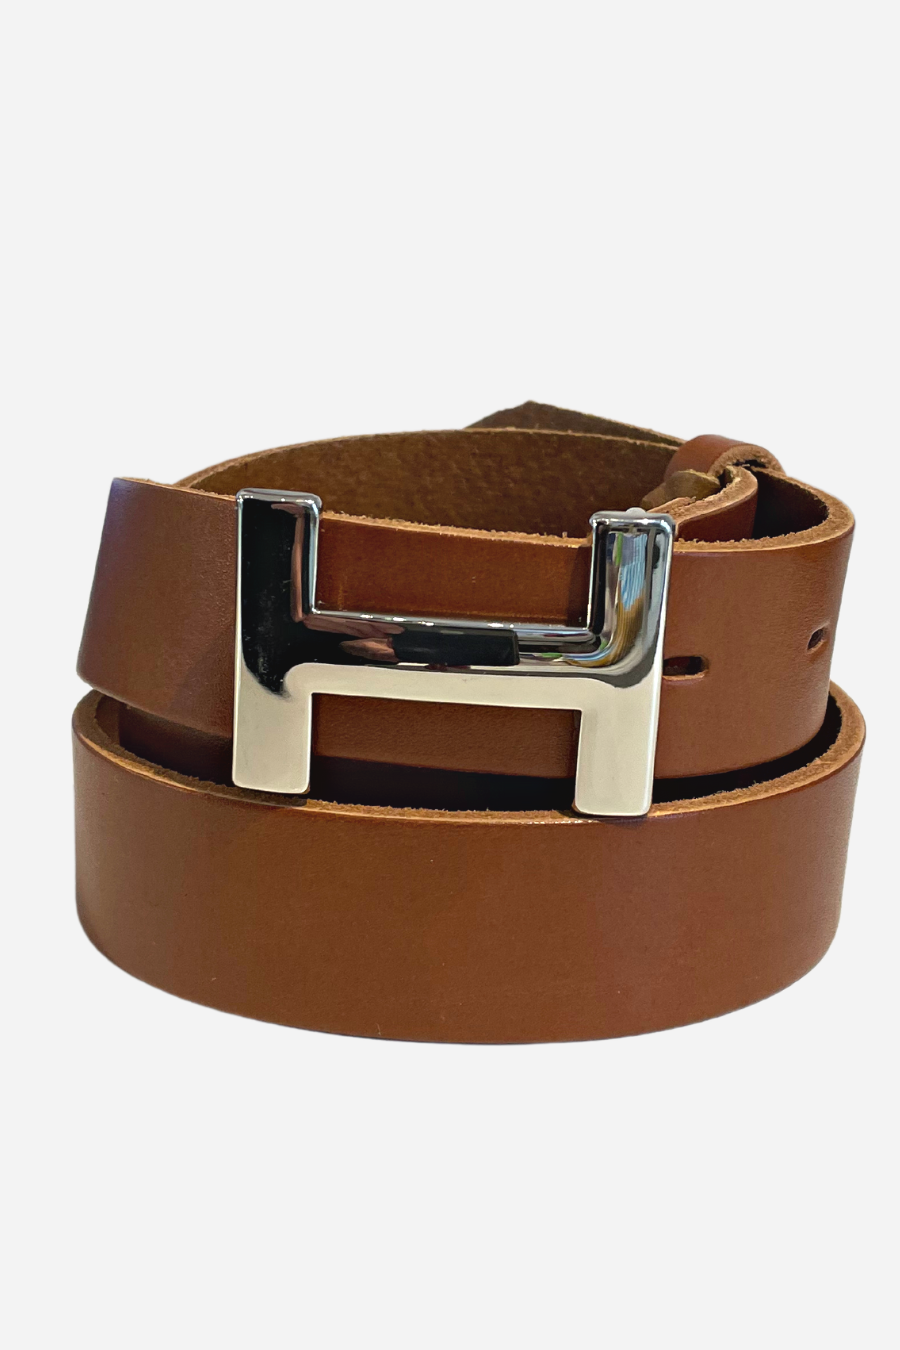 "H" Buckle Cognac Leather Belt